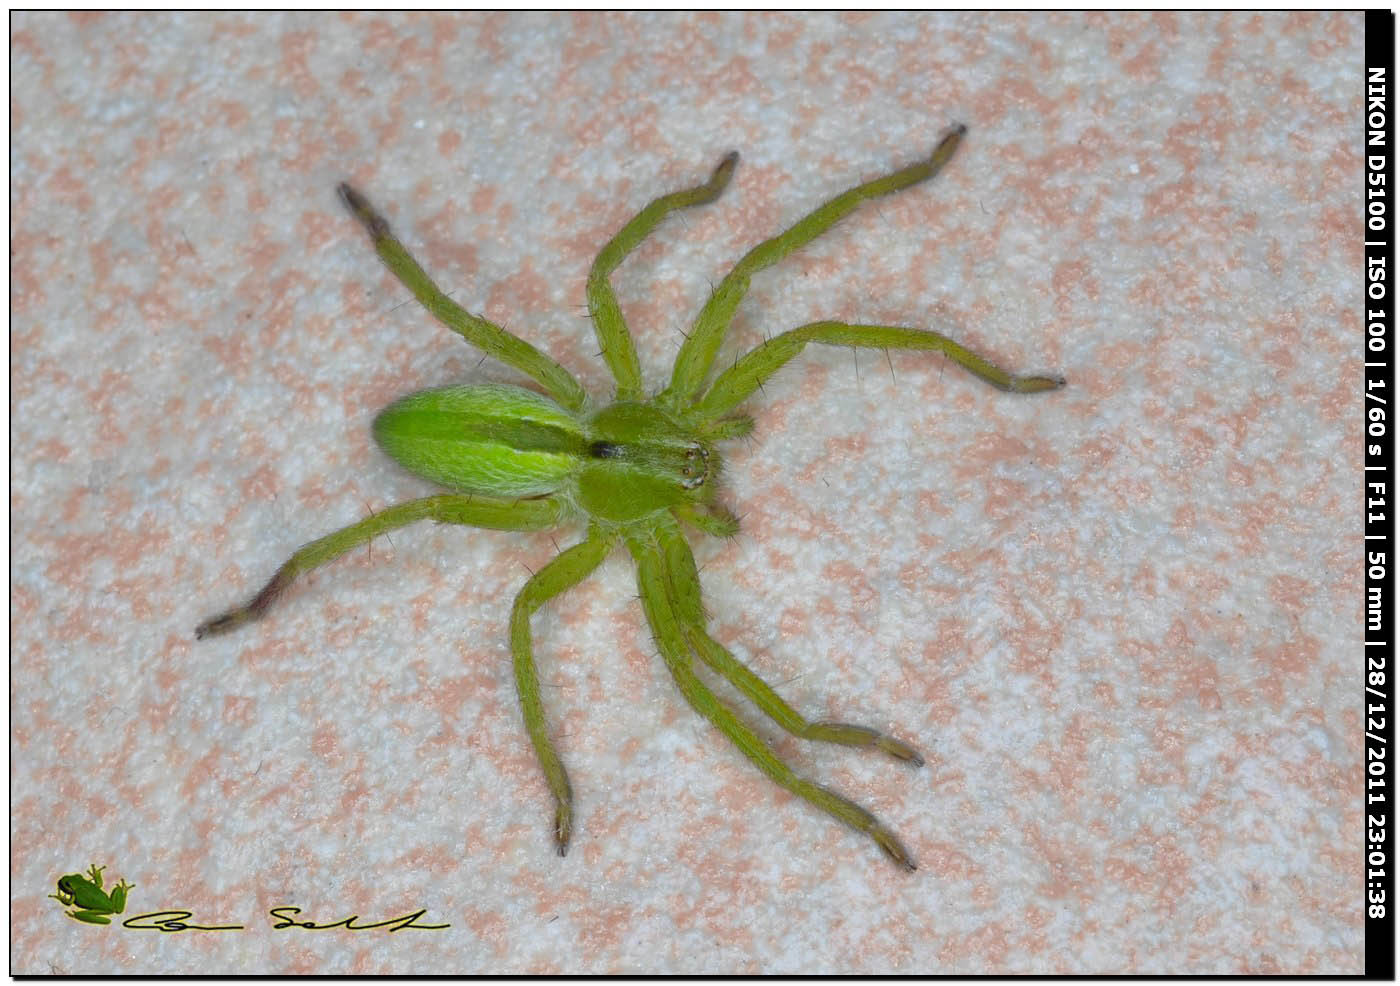 Sparassidae, Micrommata ligurina